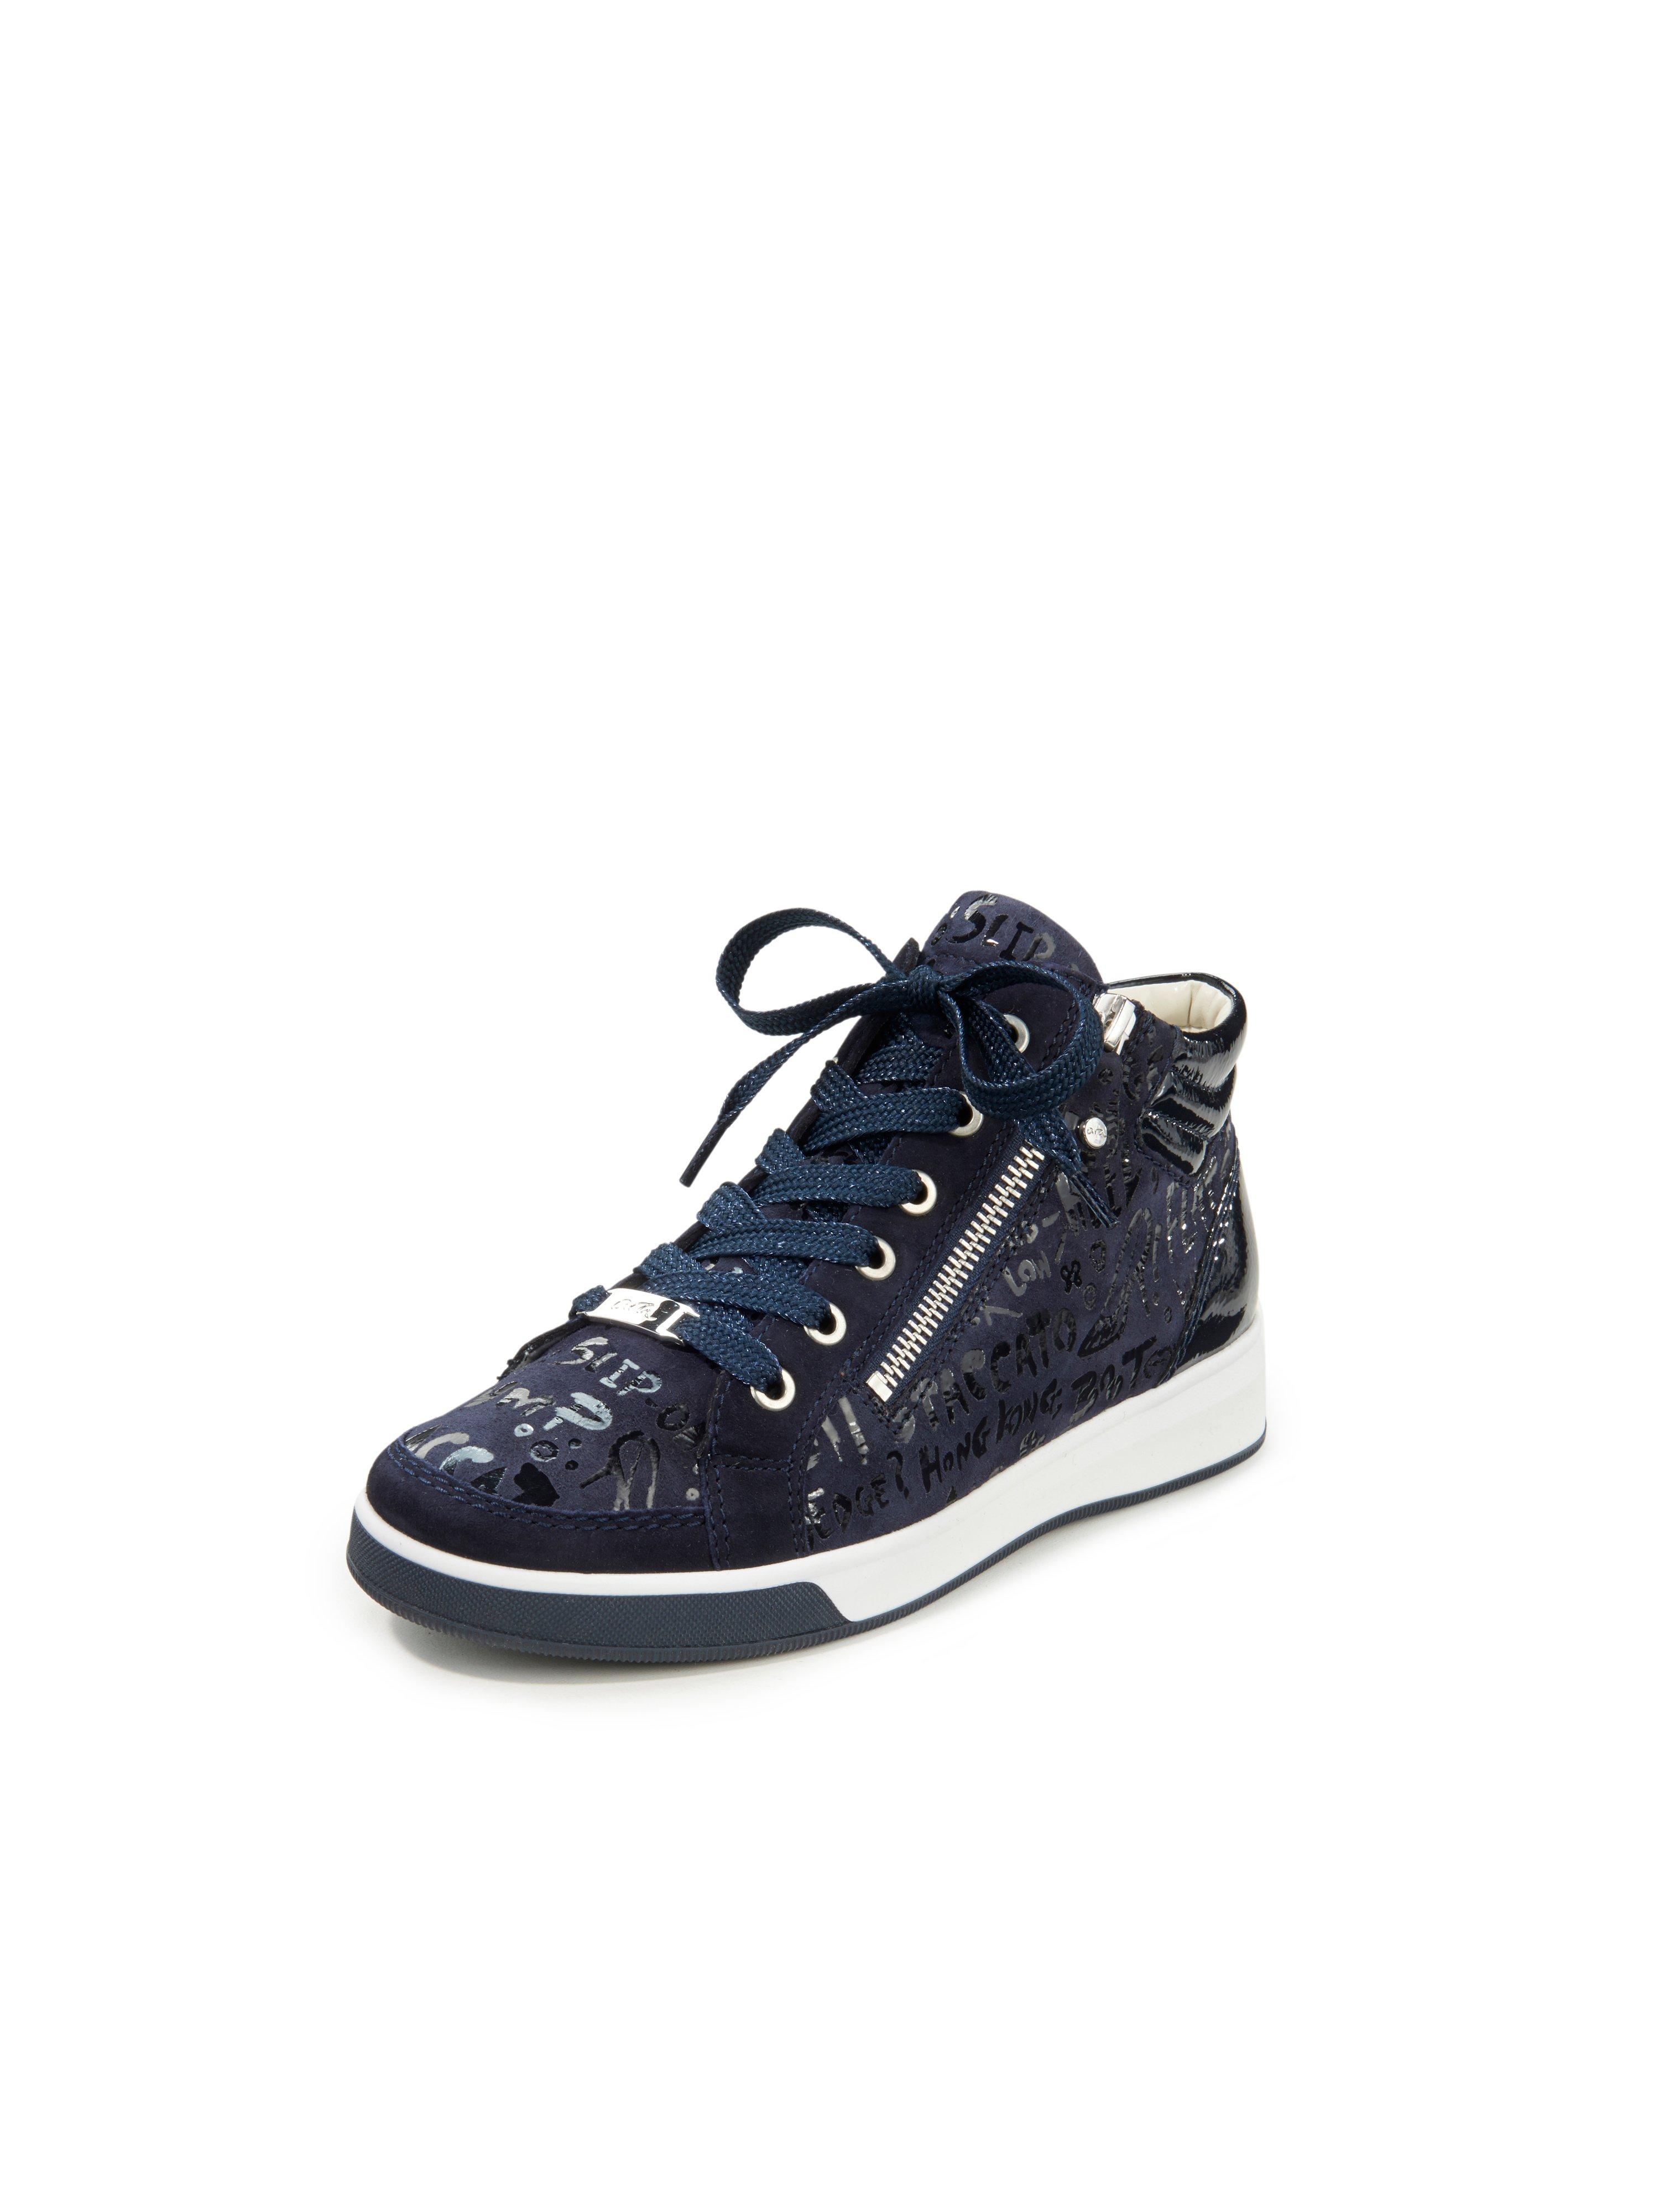 Ugle Meyella Tårer ARA - Ankle-high sneakers Rom-St HighSoft - dark blue